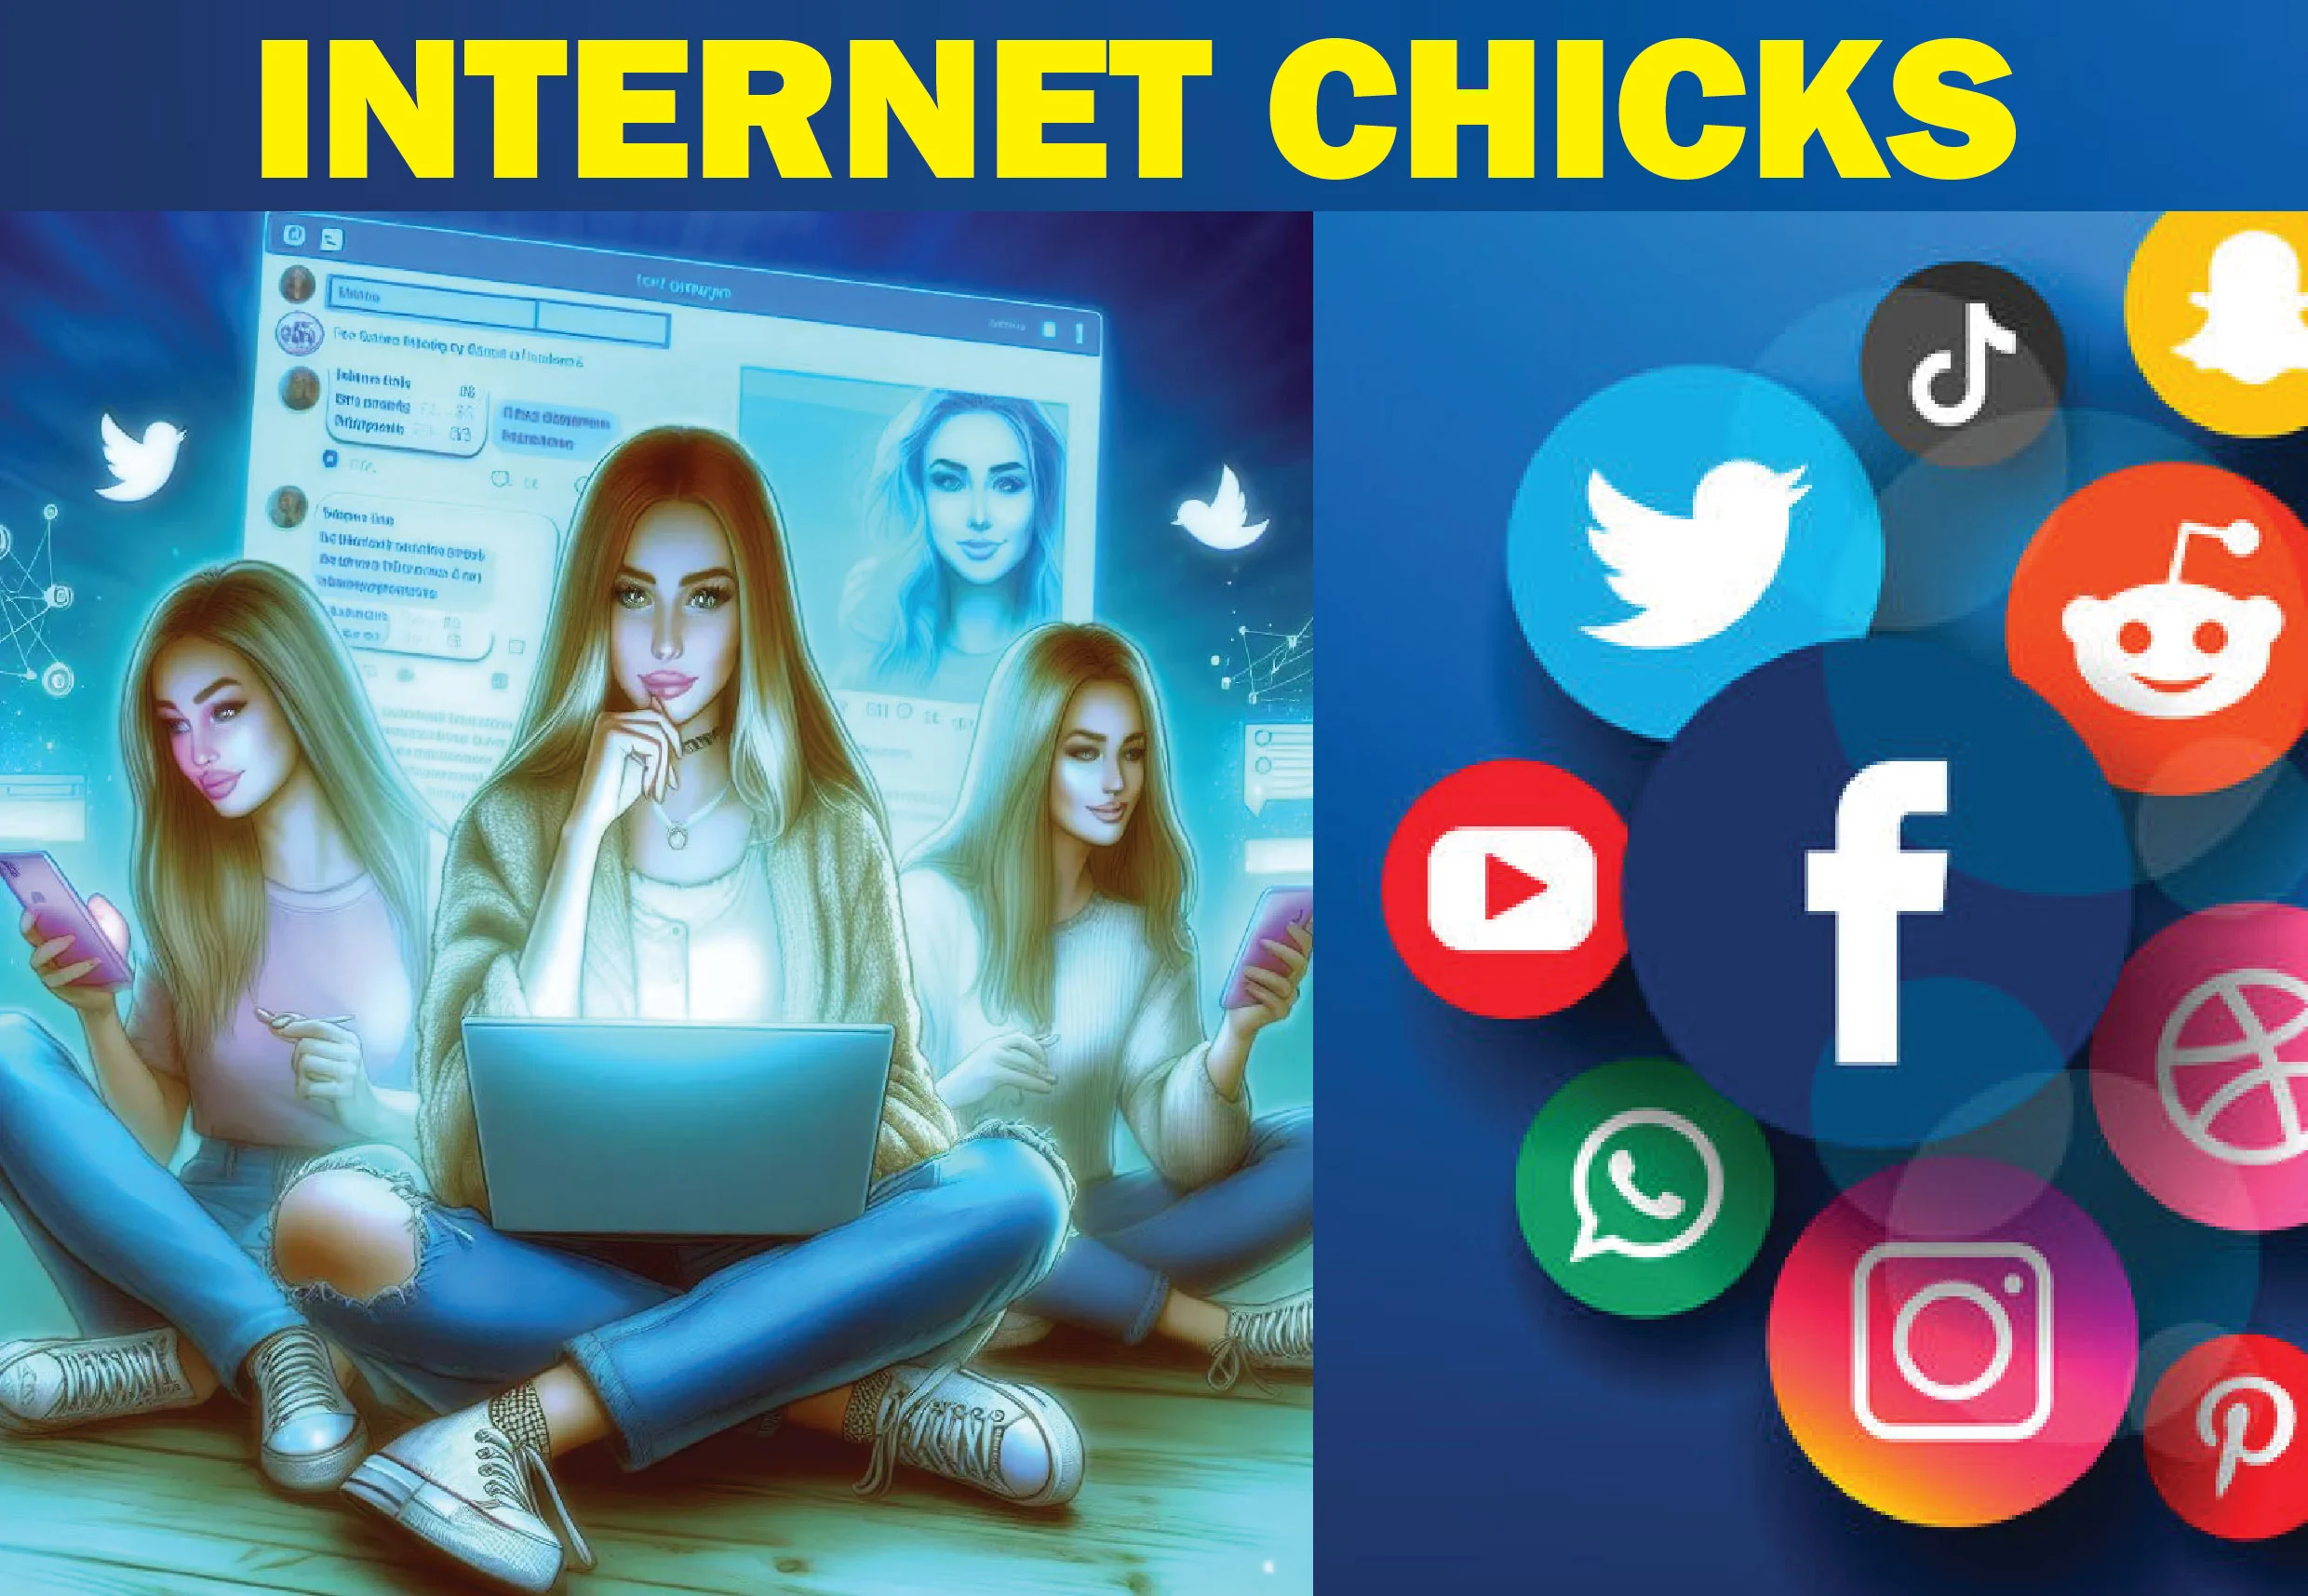 Internet Chicks Society: For the Fantastic Love of Birds!